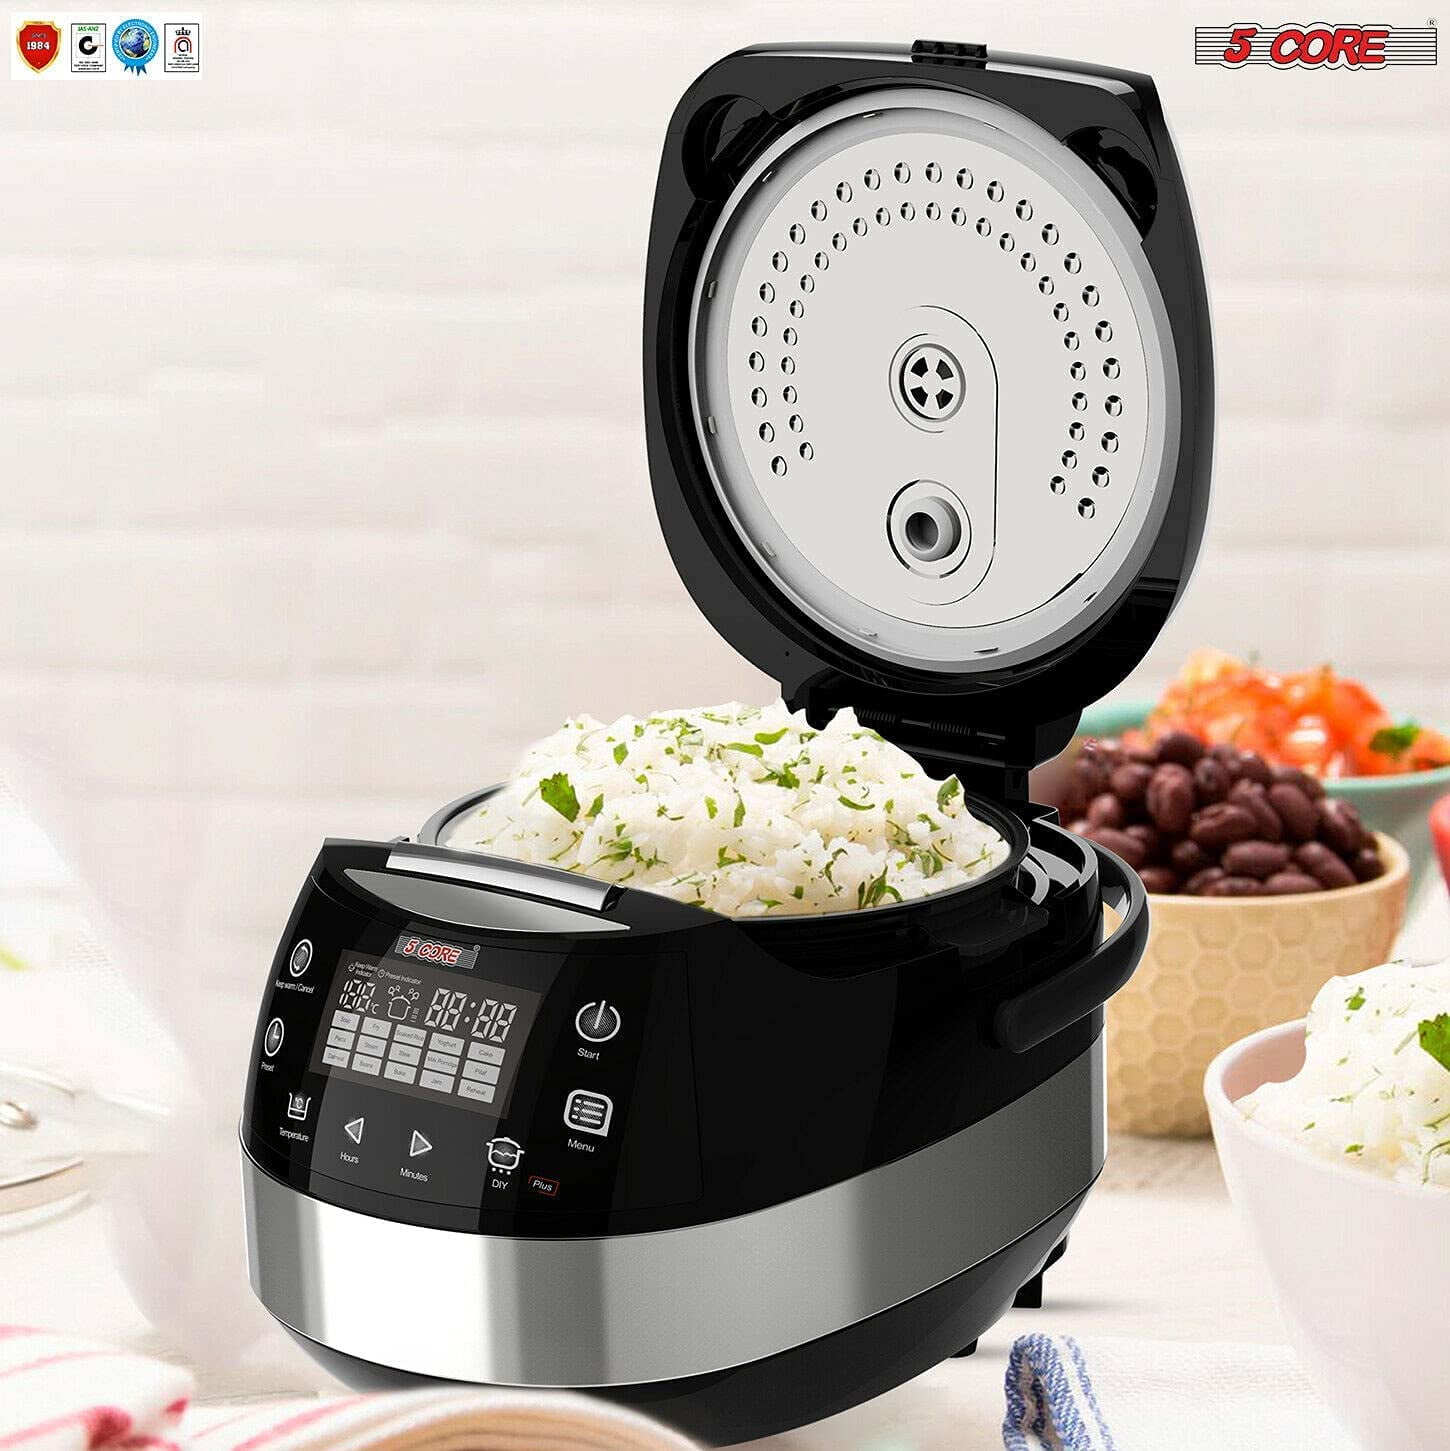 5 Core Digital Electric Rice Pot Multi Cooker & Food Steamer Warmer 5.3 qt Brown